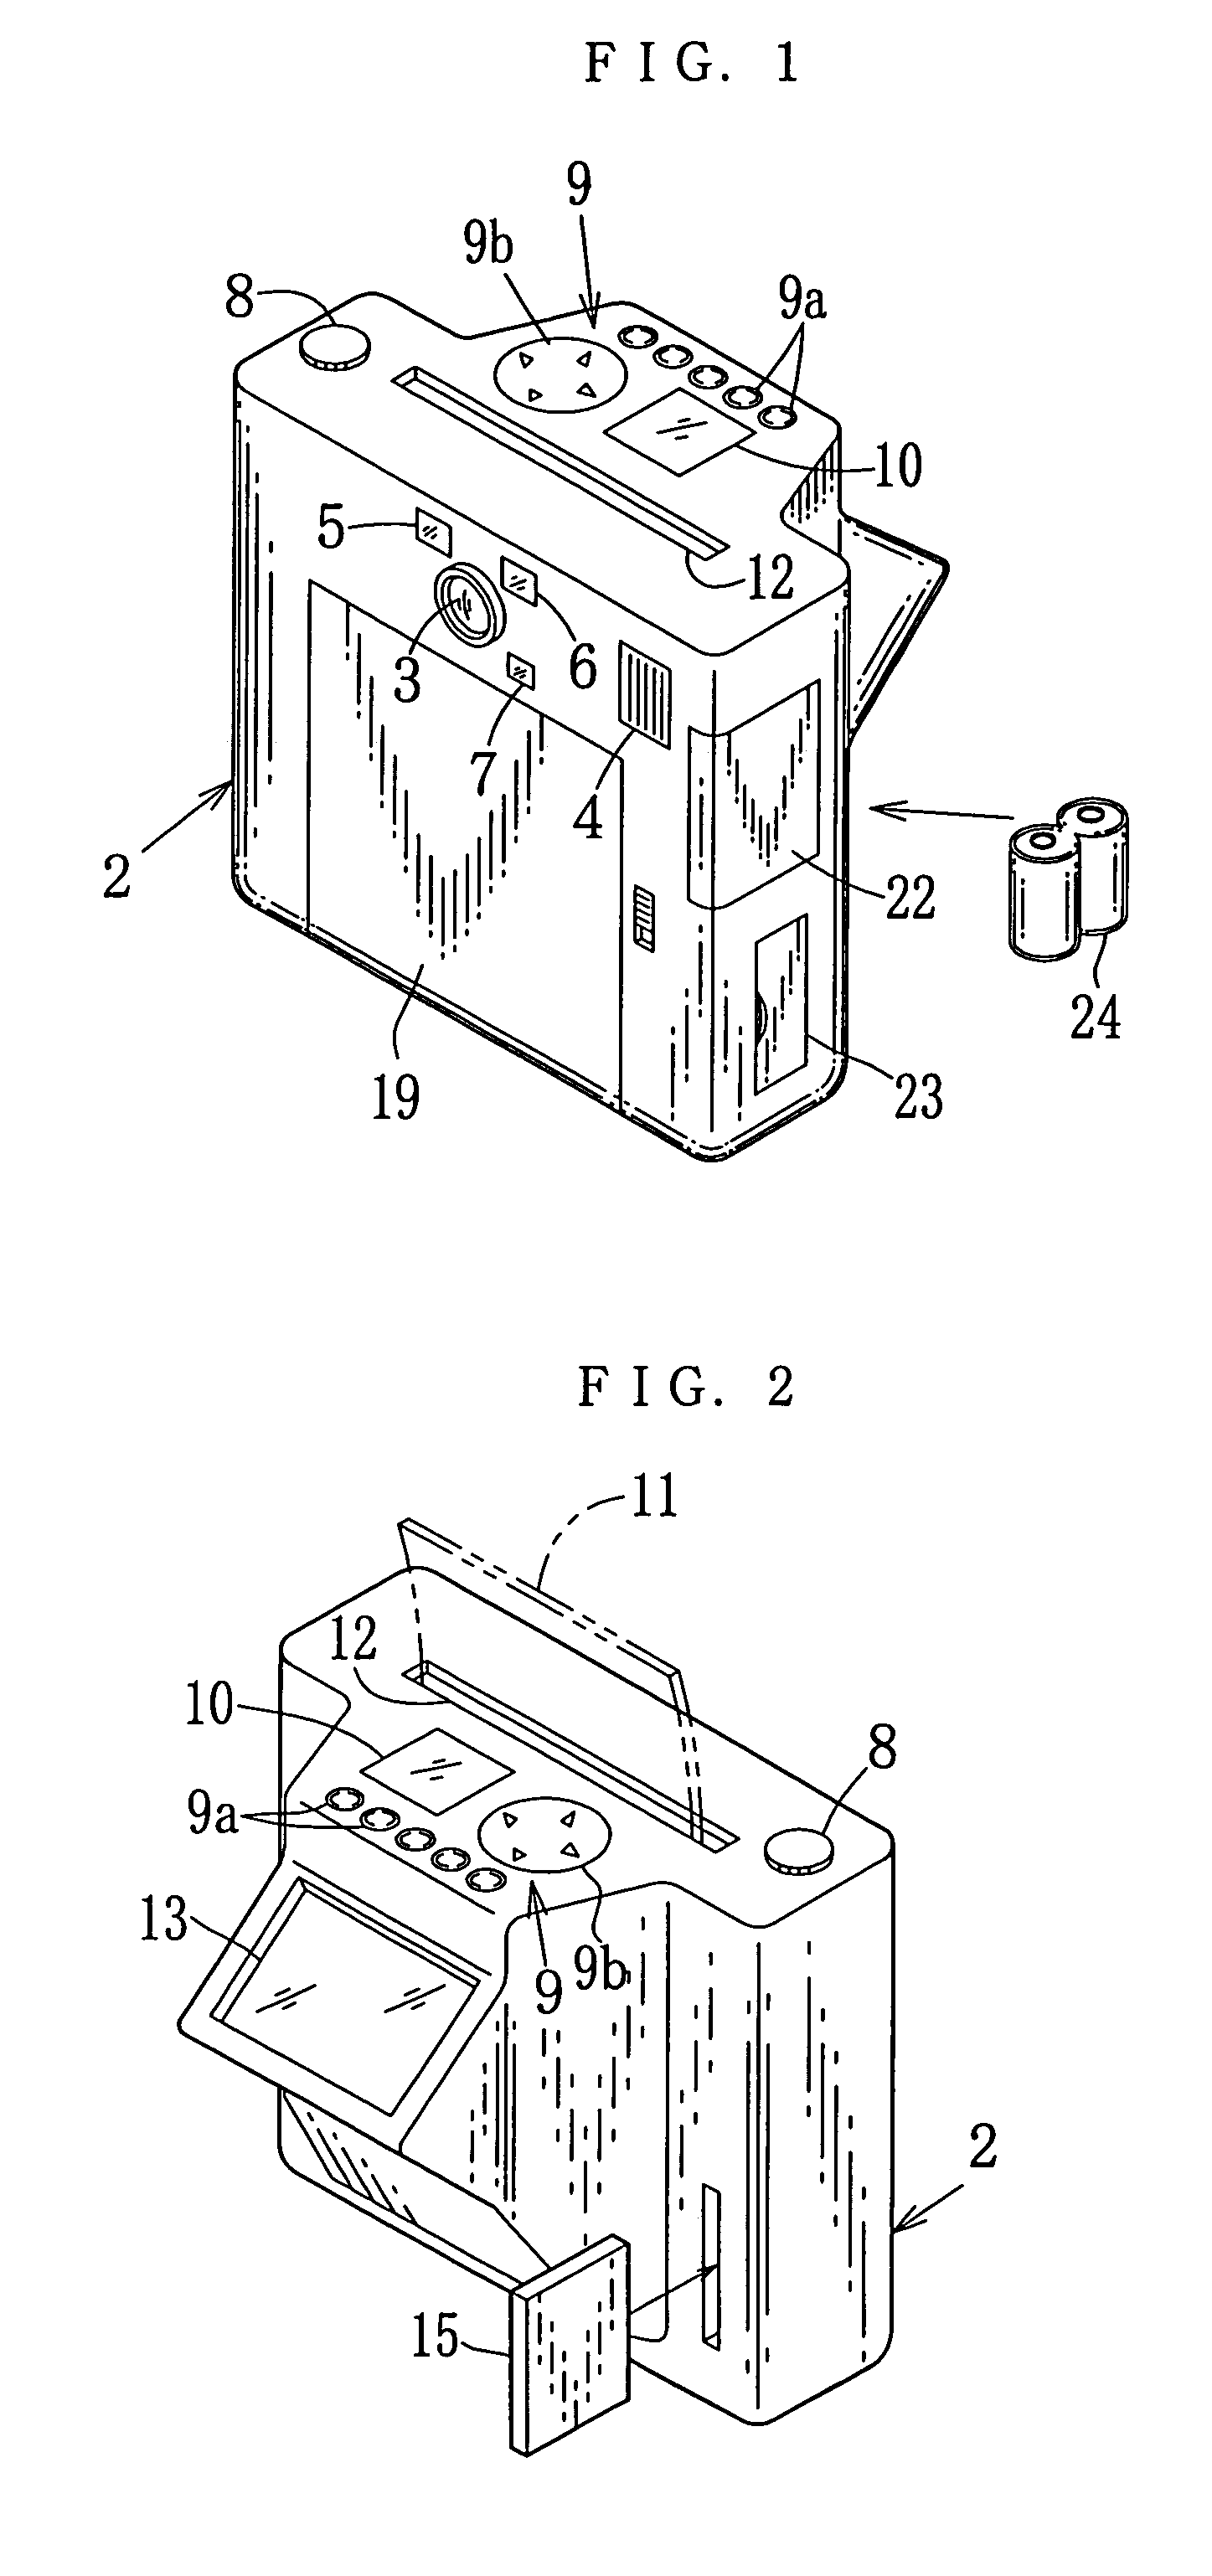 Portable printer and camera